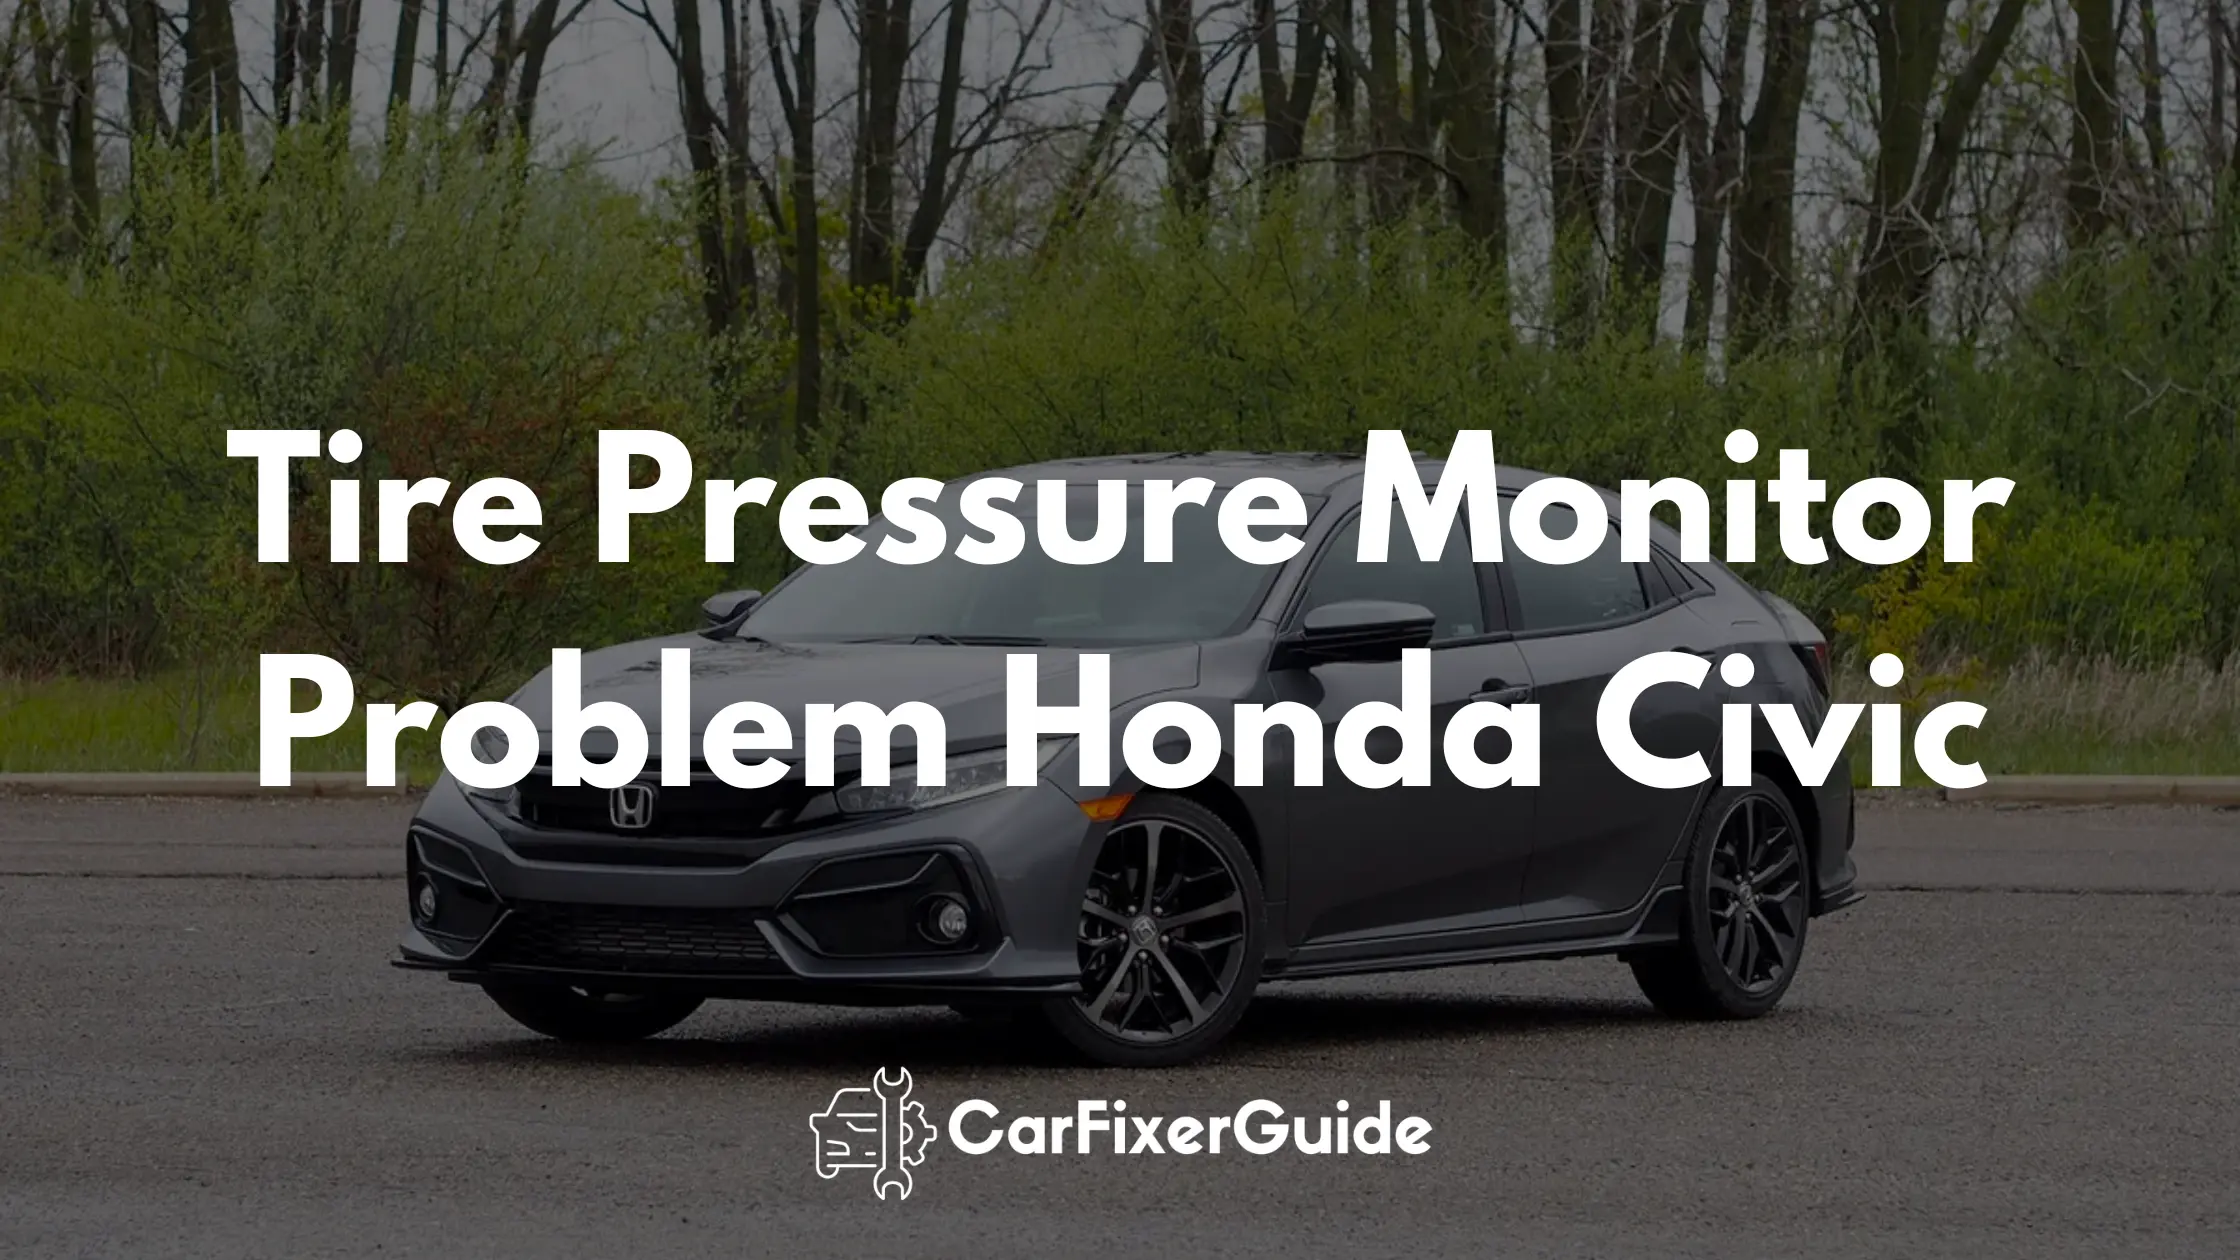 Tire Pressure Monitor Problem Honda Civic (Causes & Fixes)